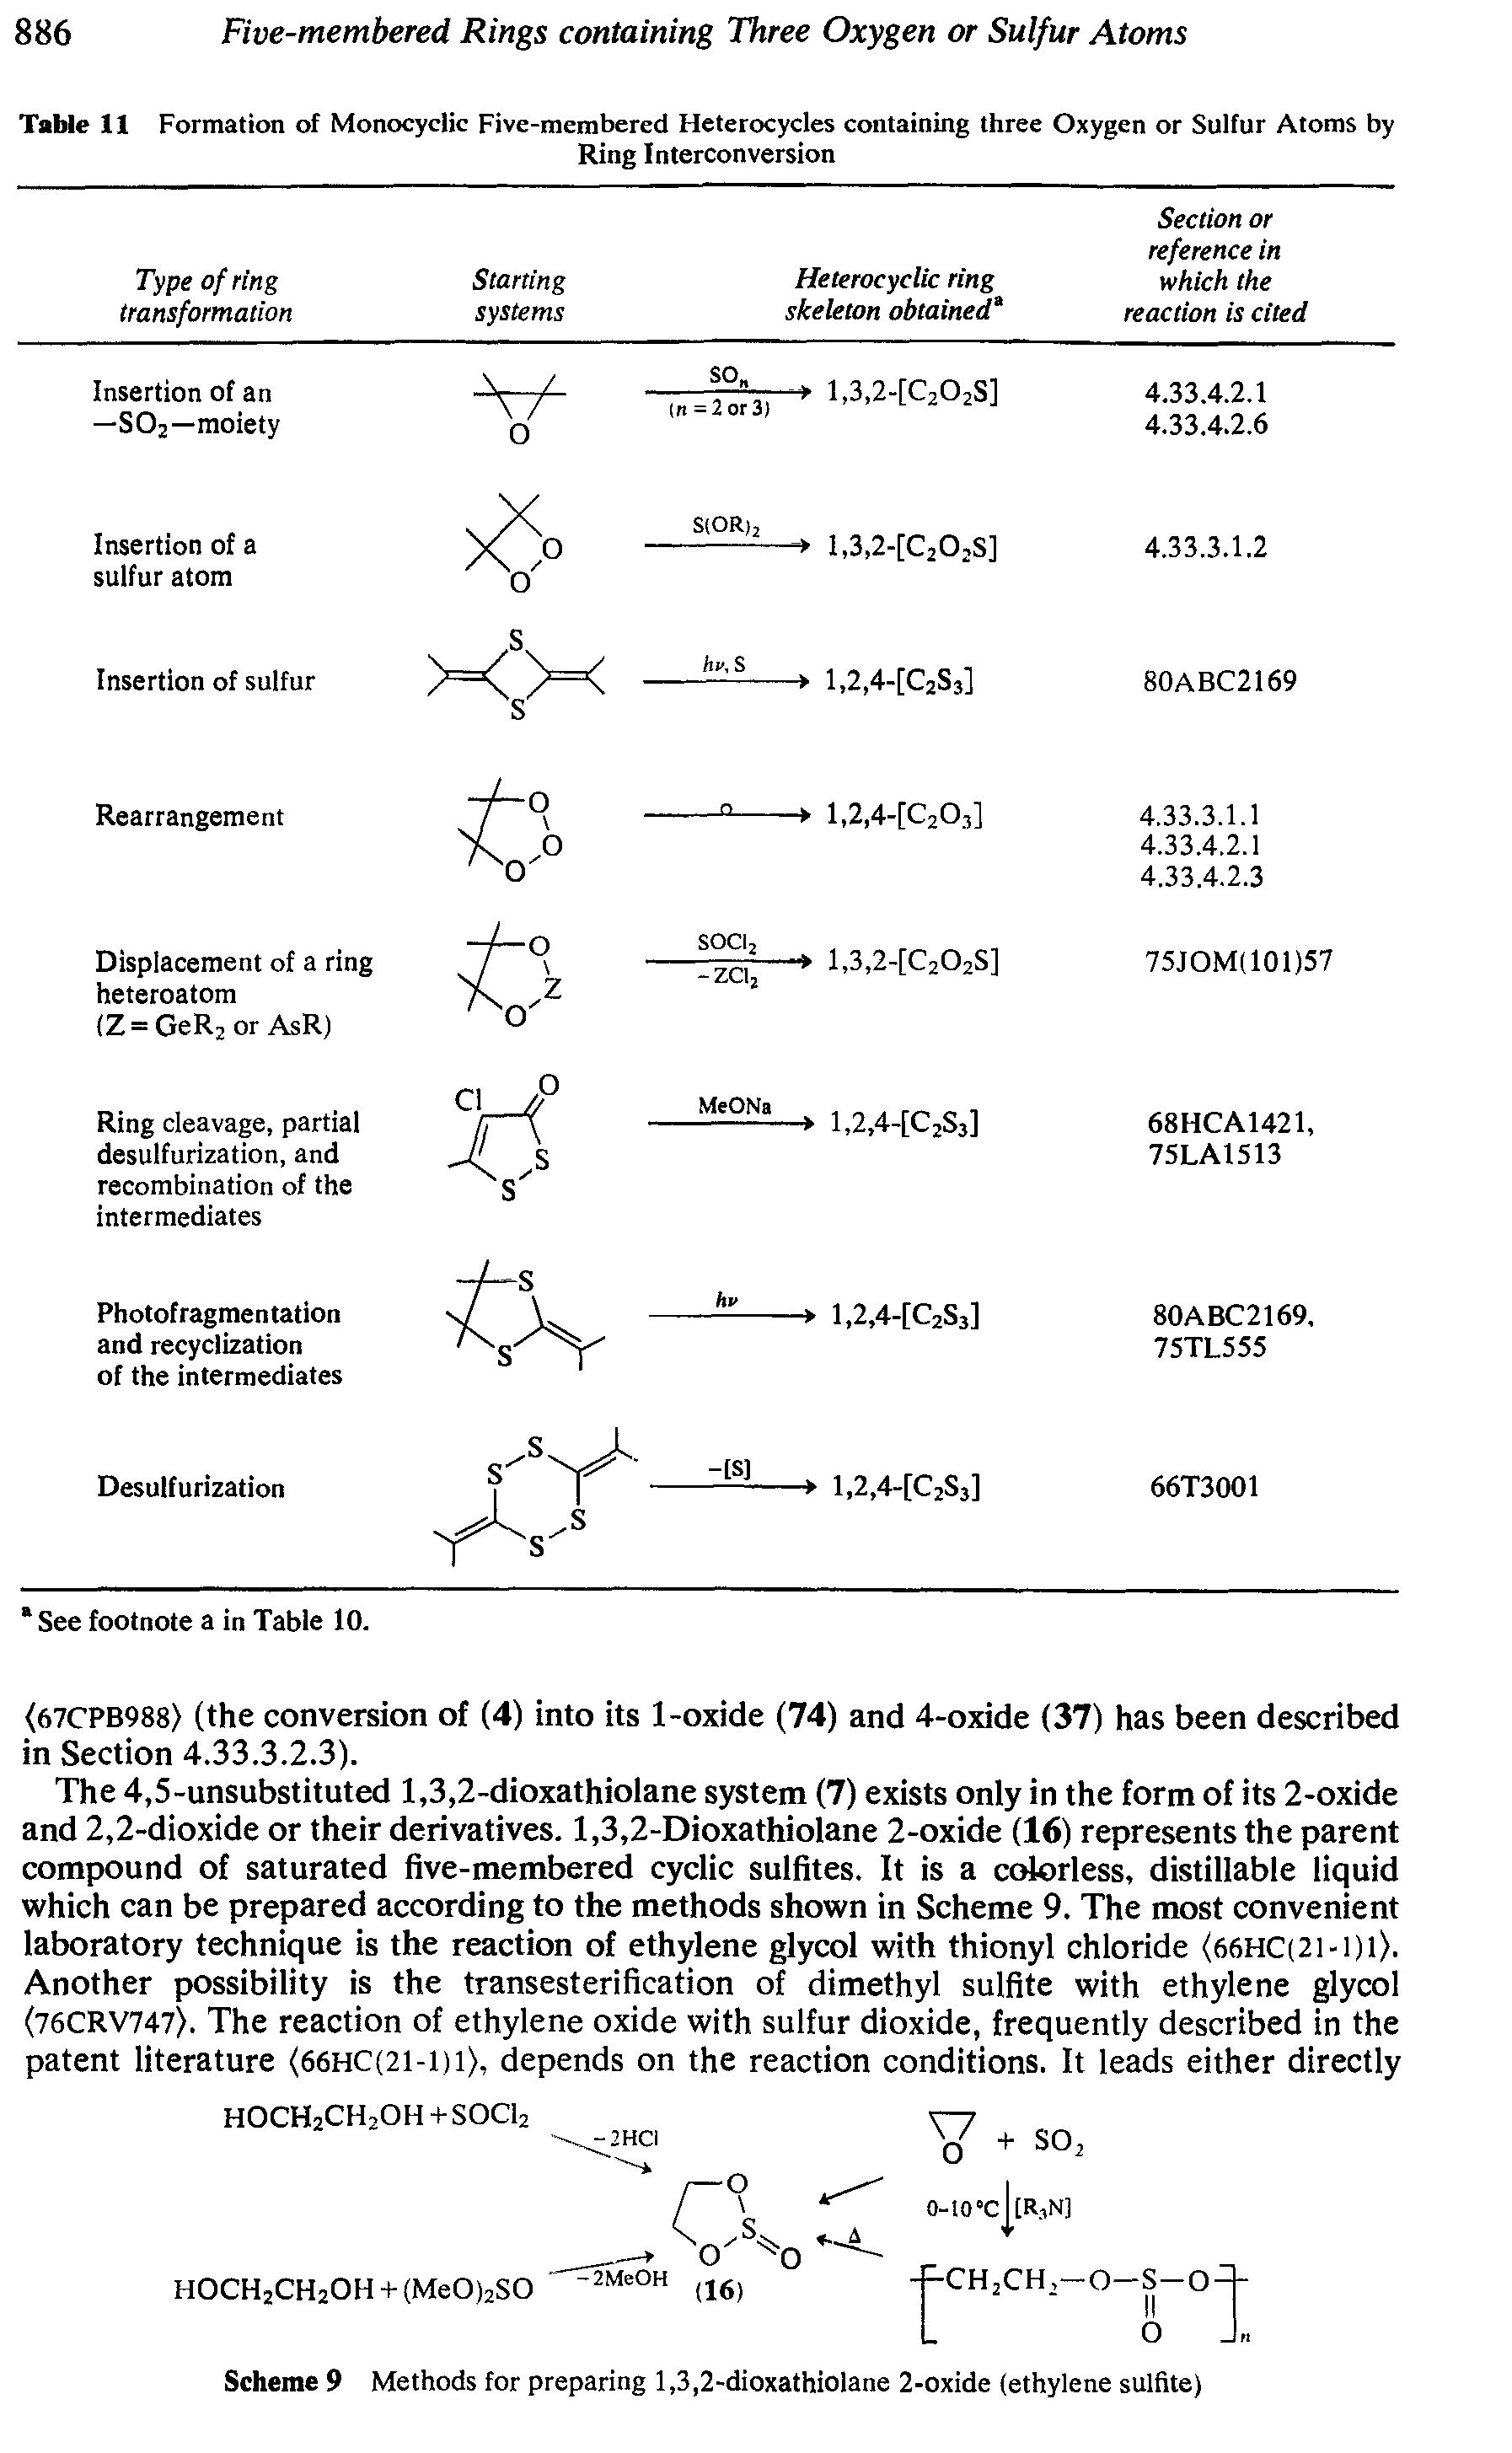 Scheme 9 Methods for preparing 1,3,2-dioxathiolane 2-oxide (ethylene sulfite)...